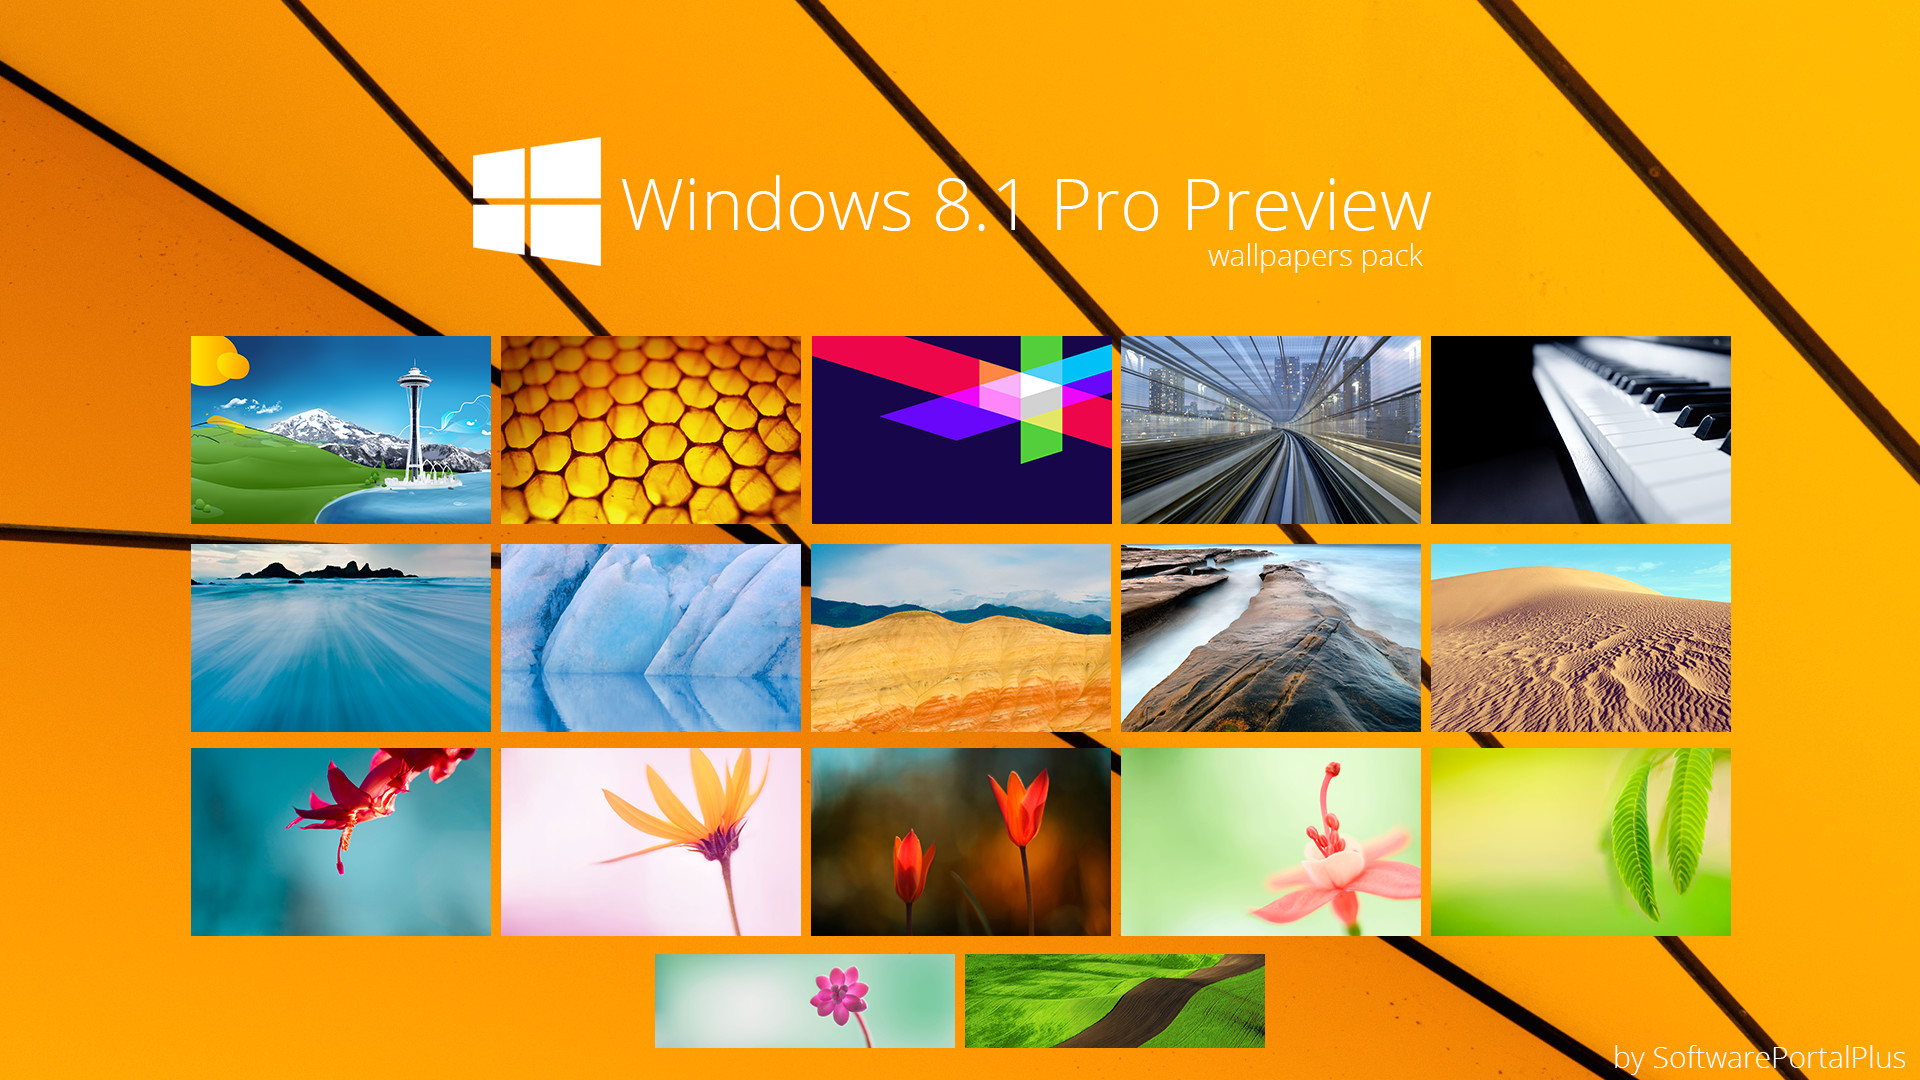 1920x1080 ... SoftwarePortalPlus Windows 8.1 Pro Proview : Wallpapers Pack by  SoftwarePortalPlus